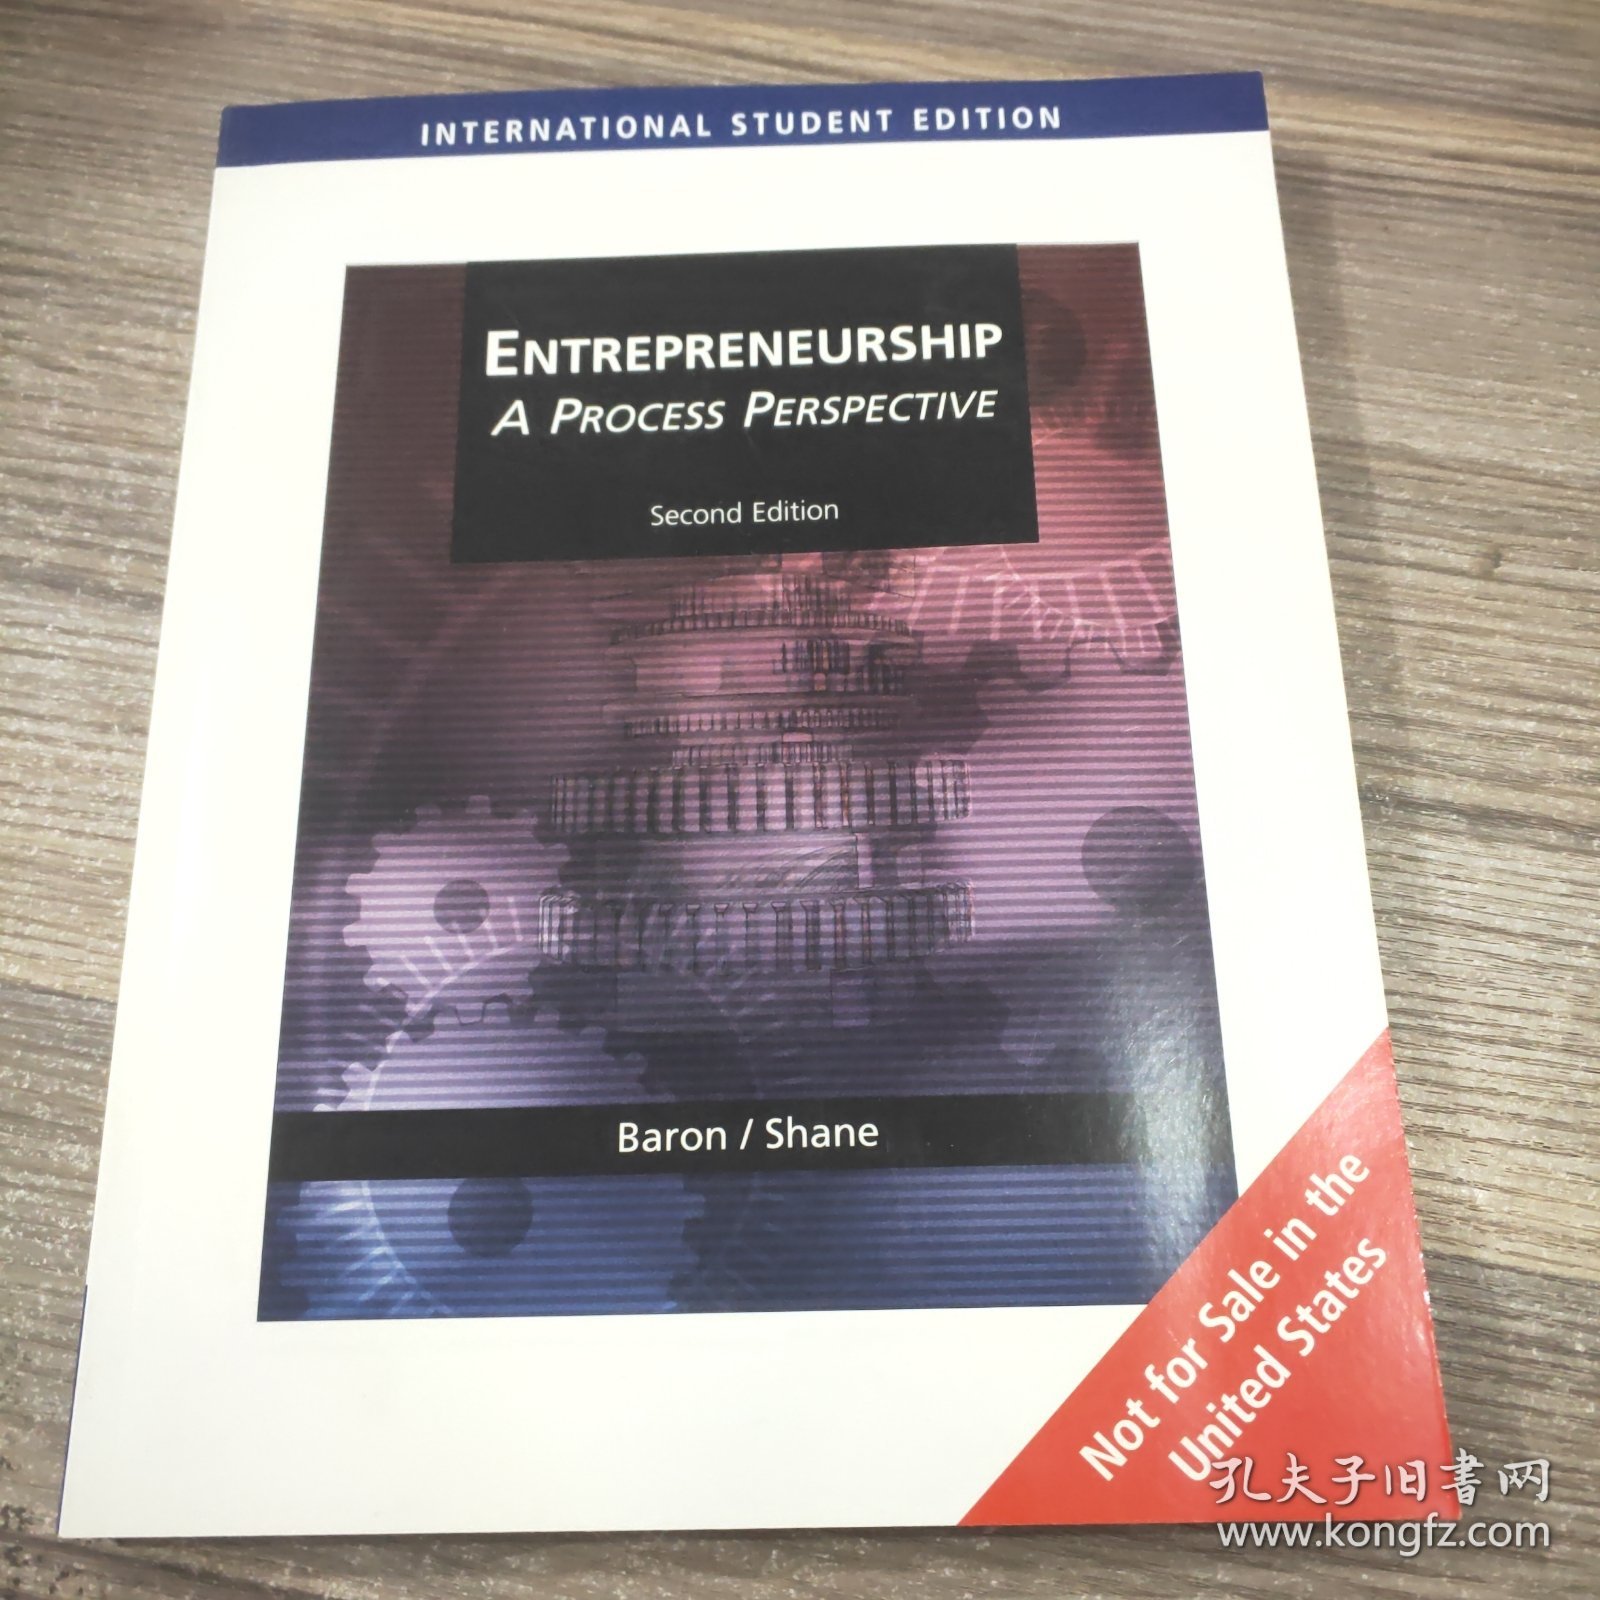 Entrepreneurship A Process Perspective (Second Edition)